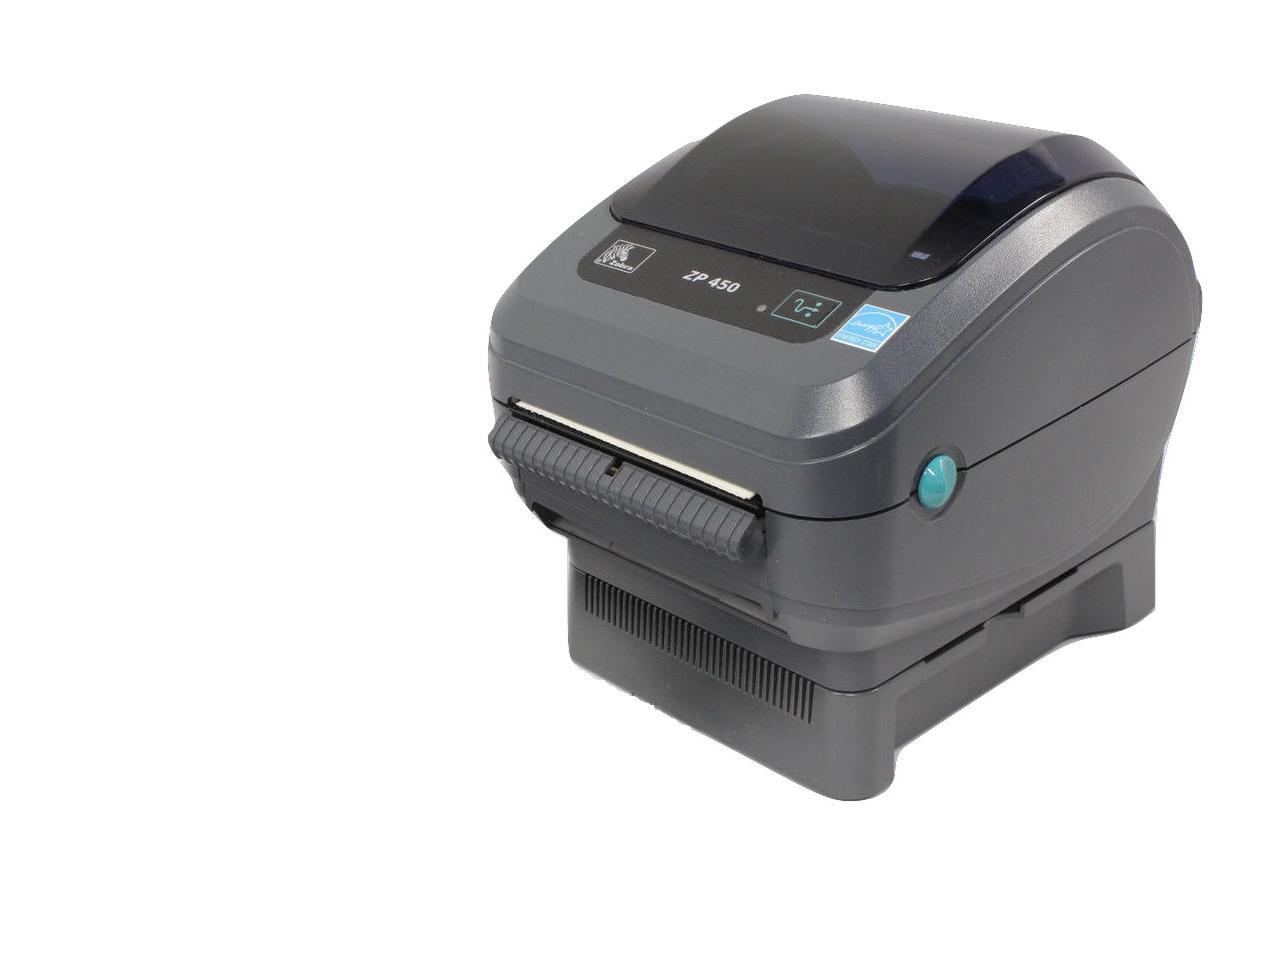 Renewed Zebra ZP450-0501-0006A CTP High Speed Direct Thermal Label Printer